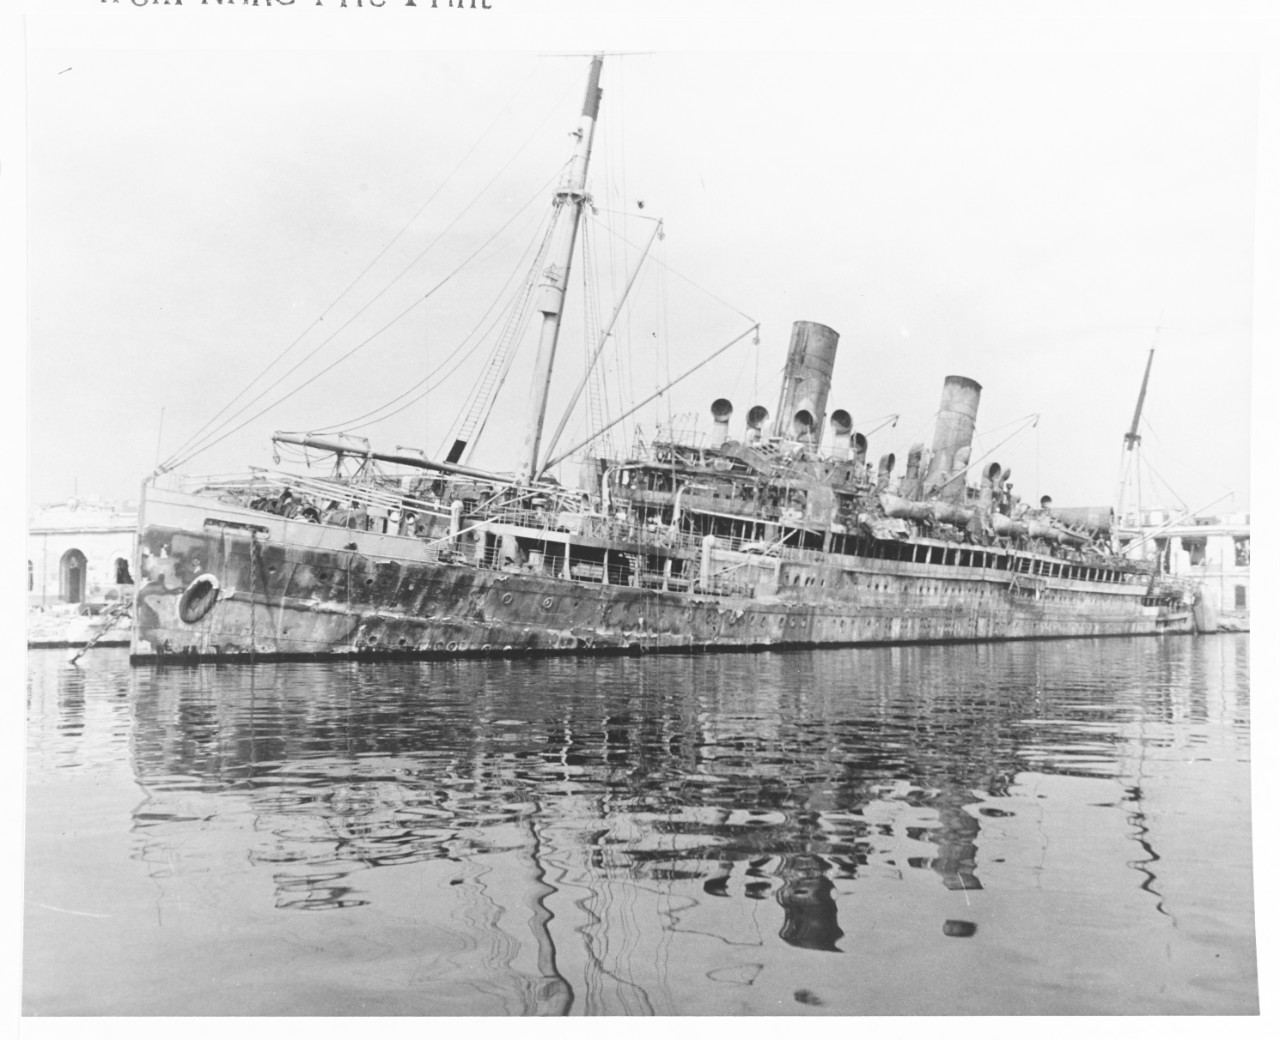 LOMBARDIA (Italian liner, 1920)